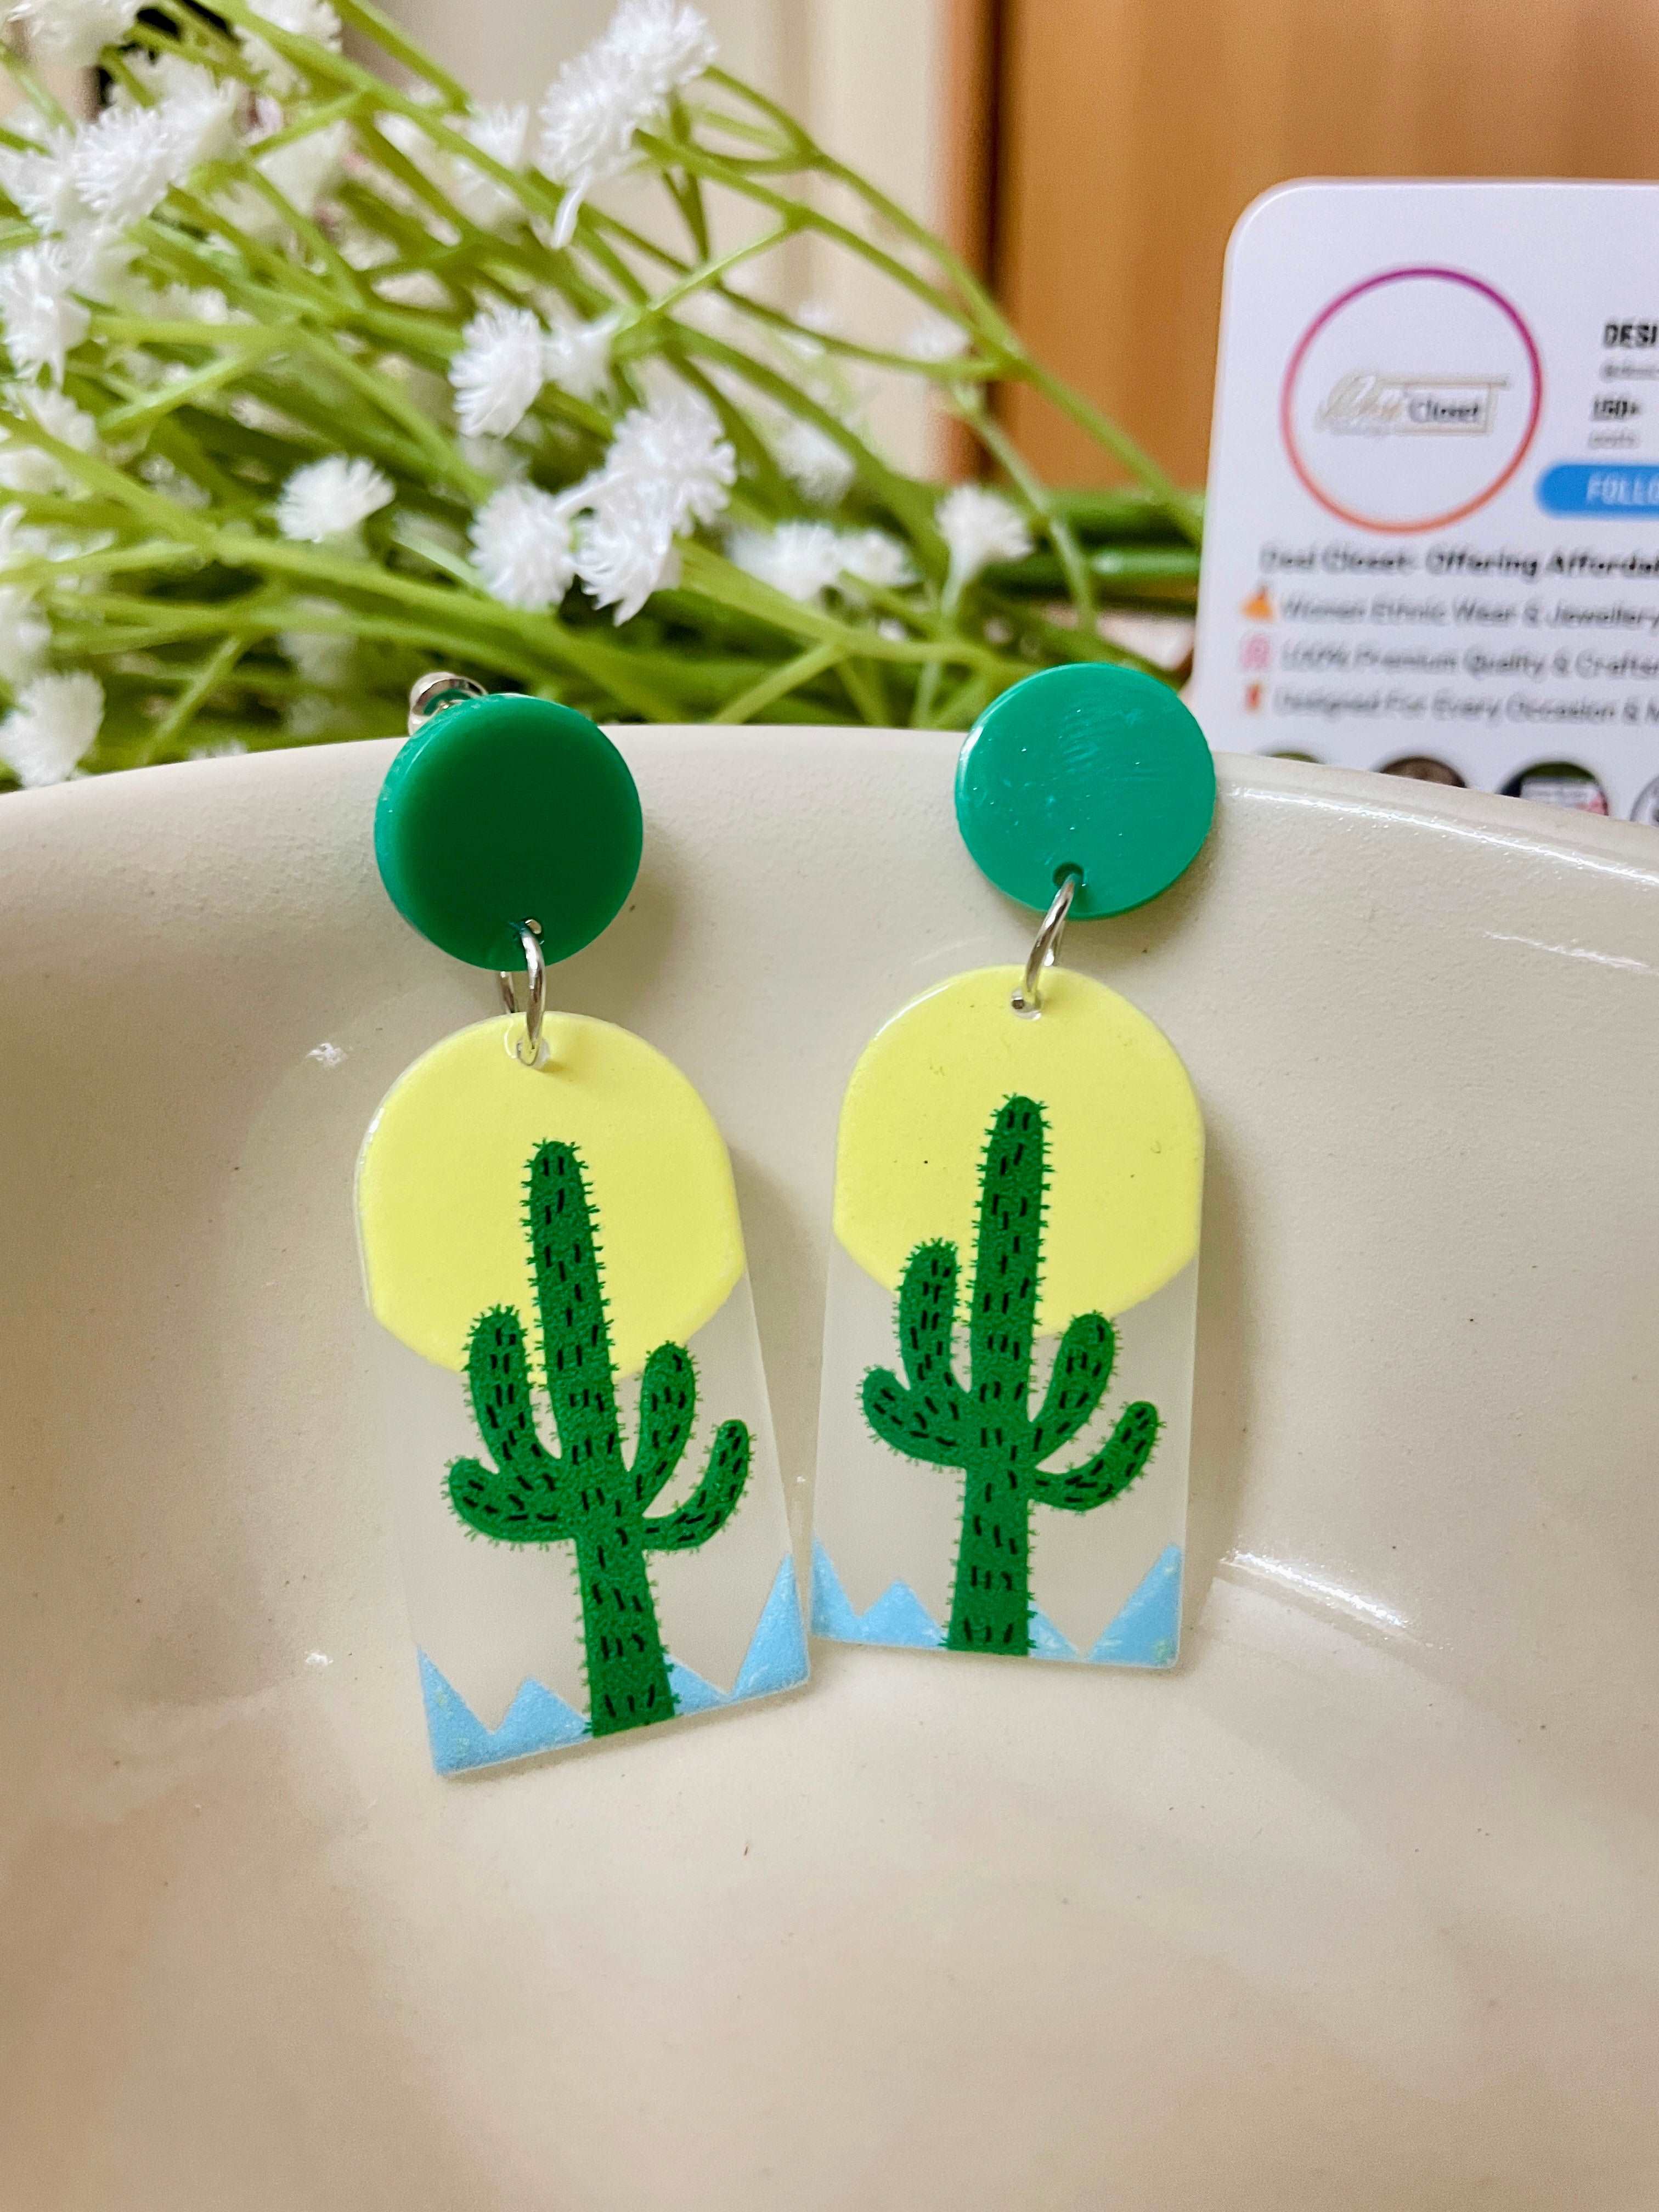 Cacti Acrylic Weightless Earrings - Desi Closet